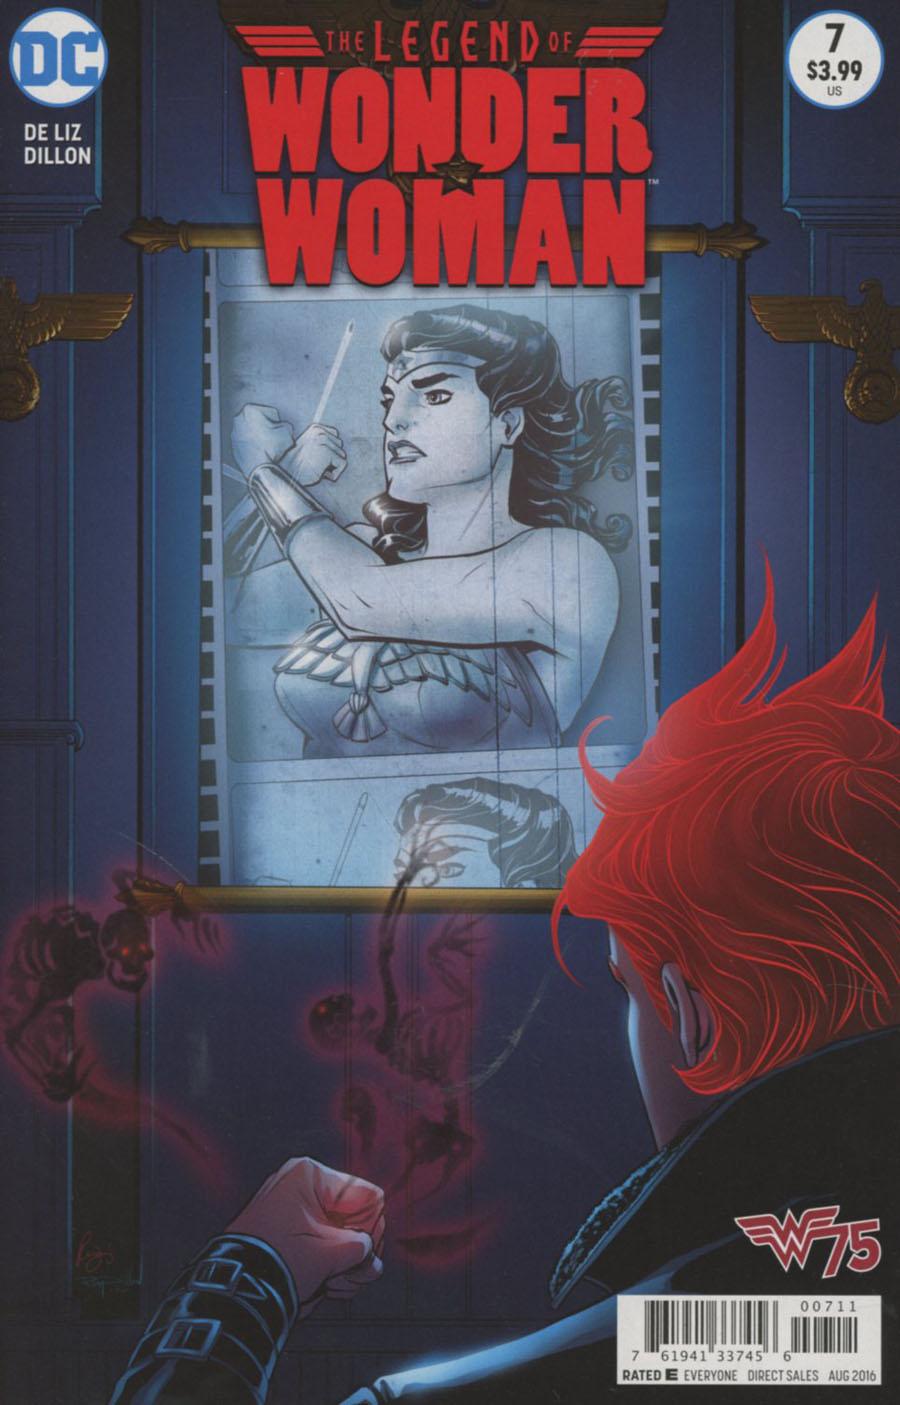 Legend of Wonder Woman Vol. 2 #7